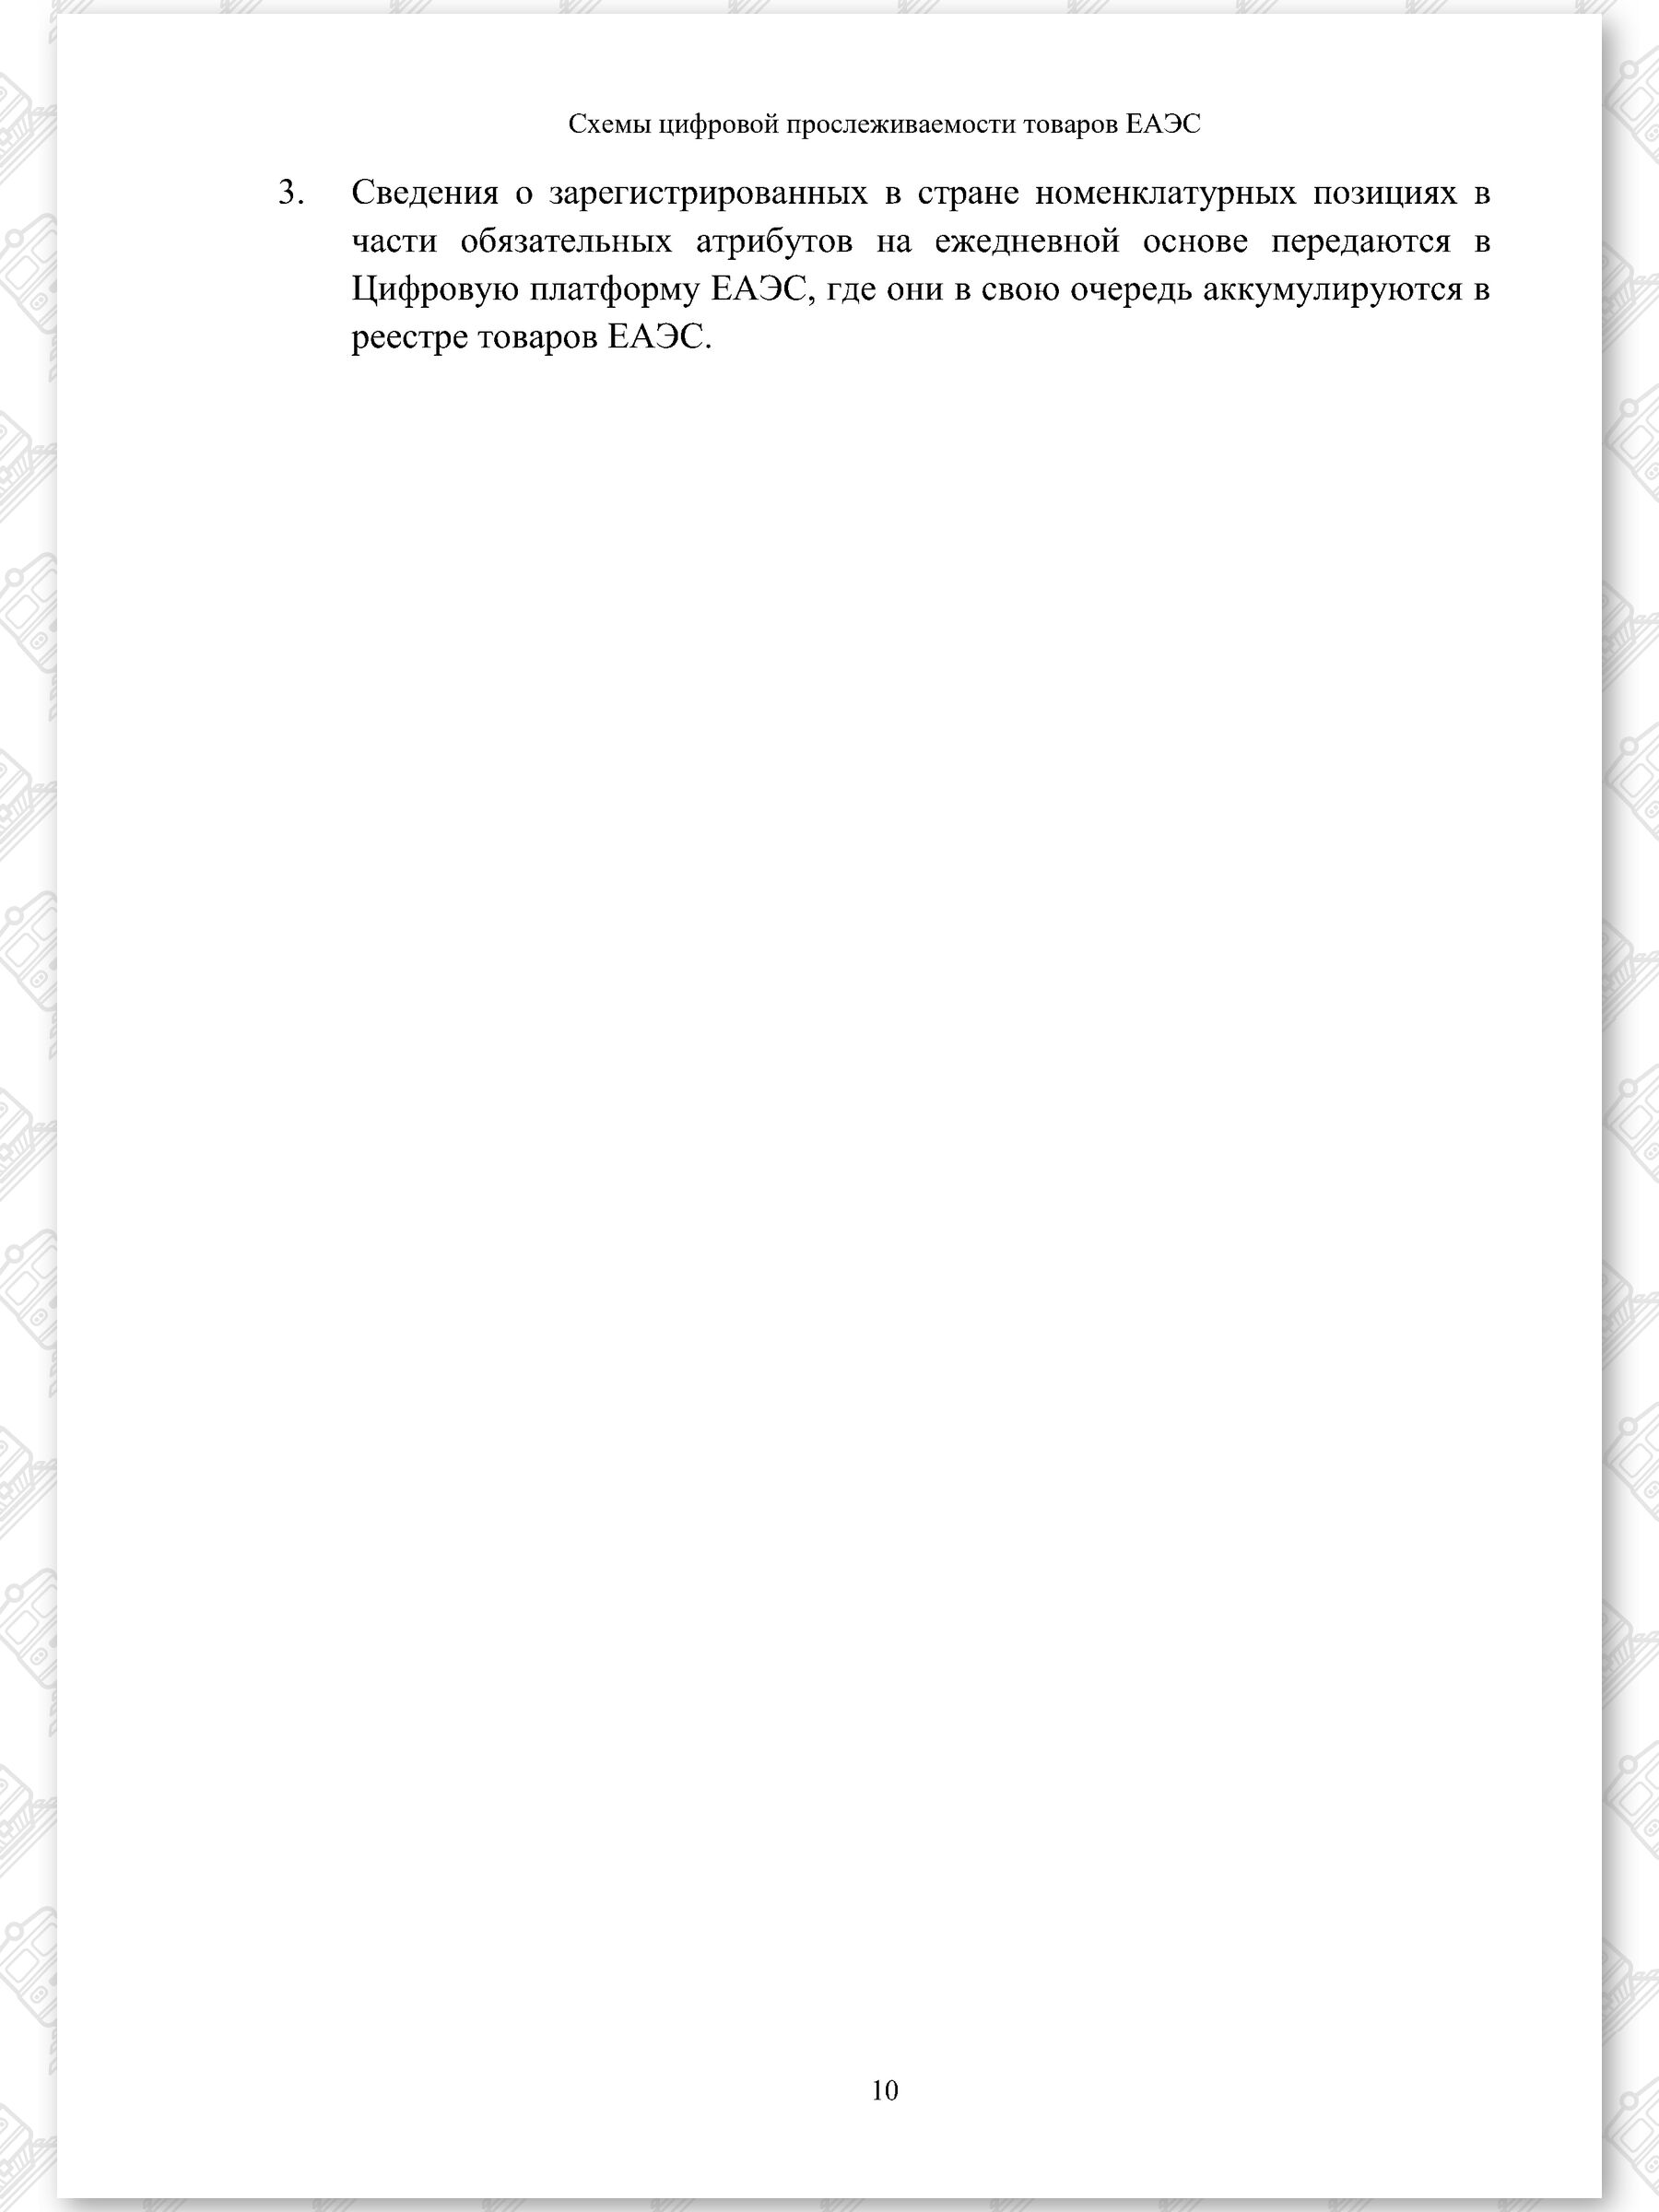 Схемы ЦПТ ЕАЭС (Страница 10)